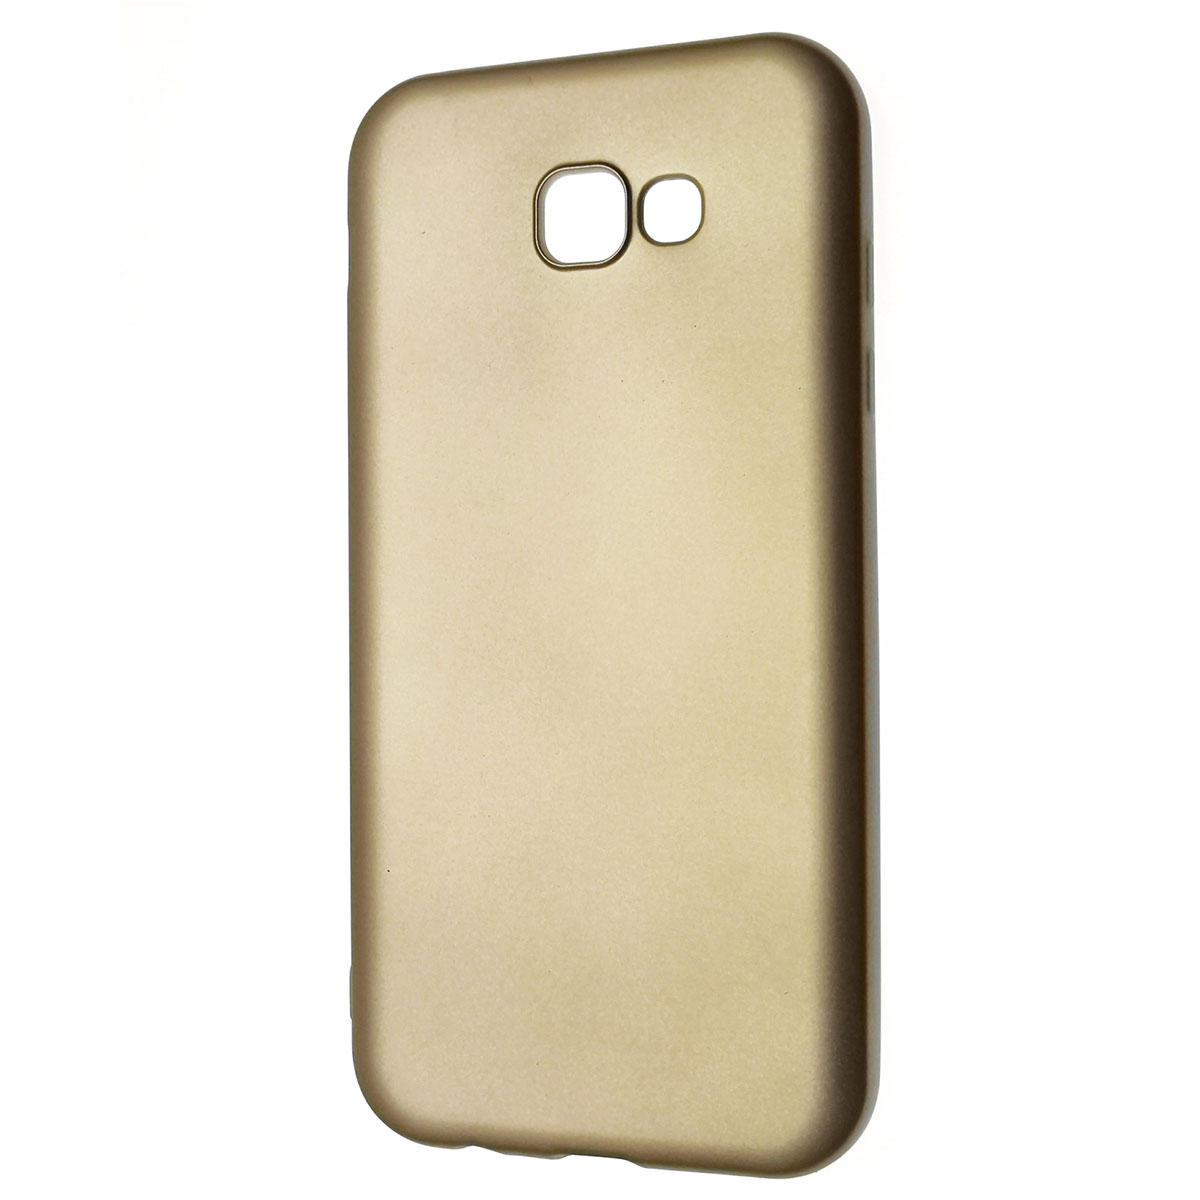 Чехол накладка J-Case THIN для SAMSUNG Galaxy A7 2017, силикон, цвет золотистый.